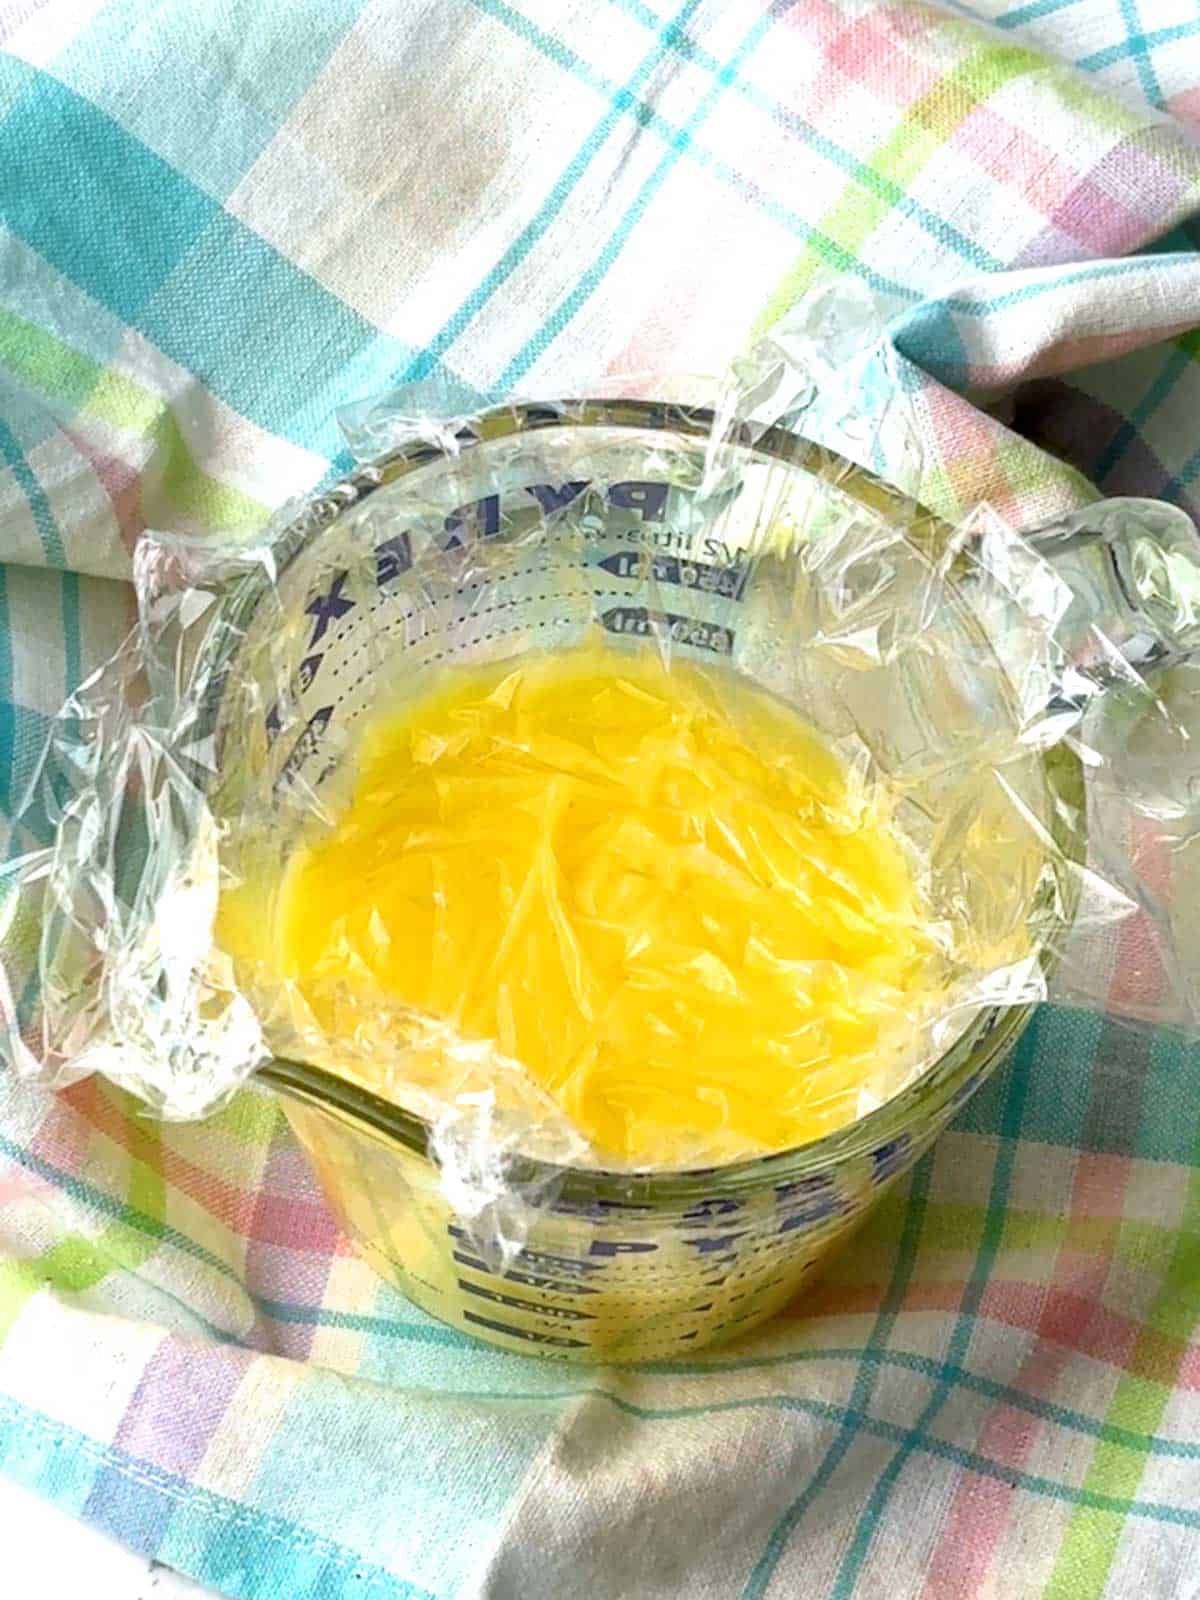 Plastic wrap placed onto the lemon curd.